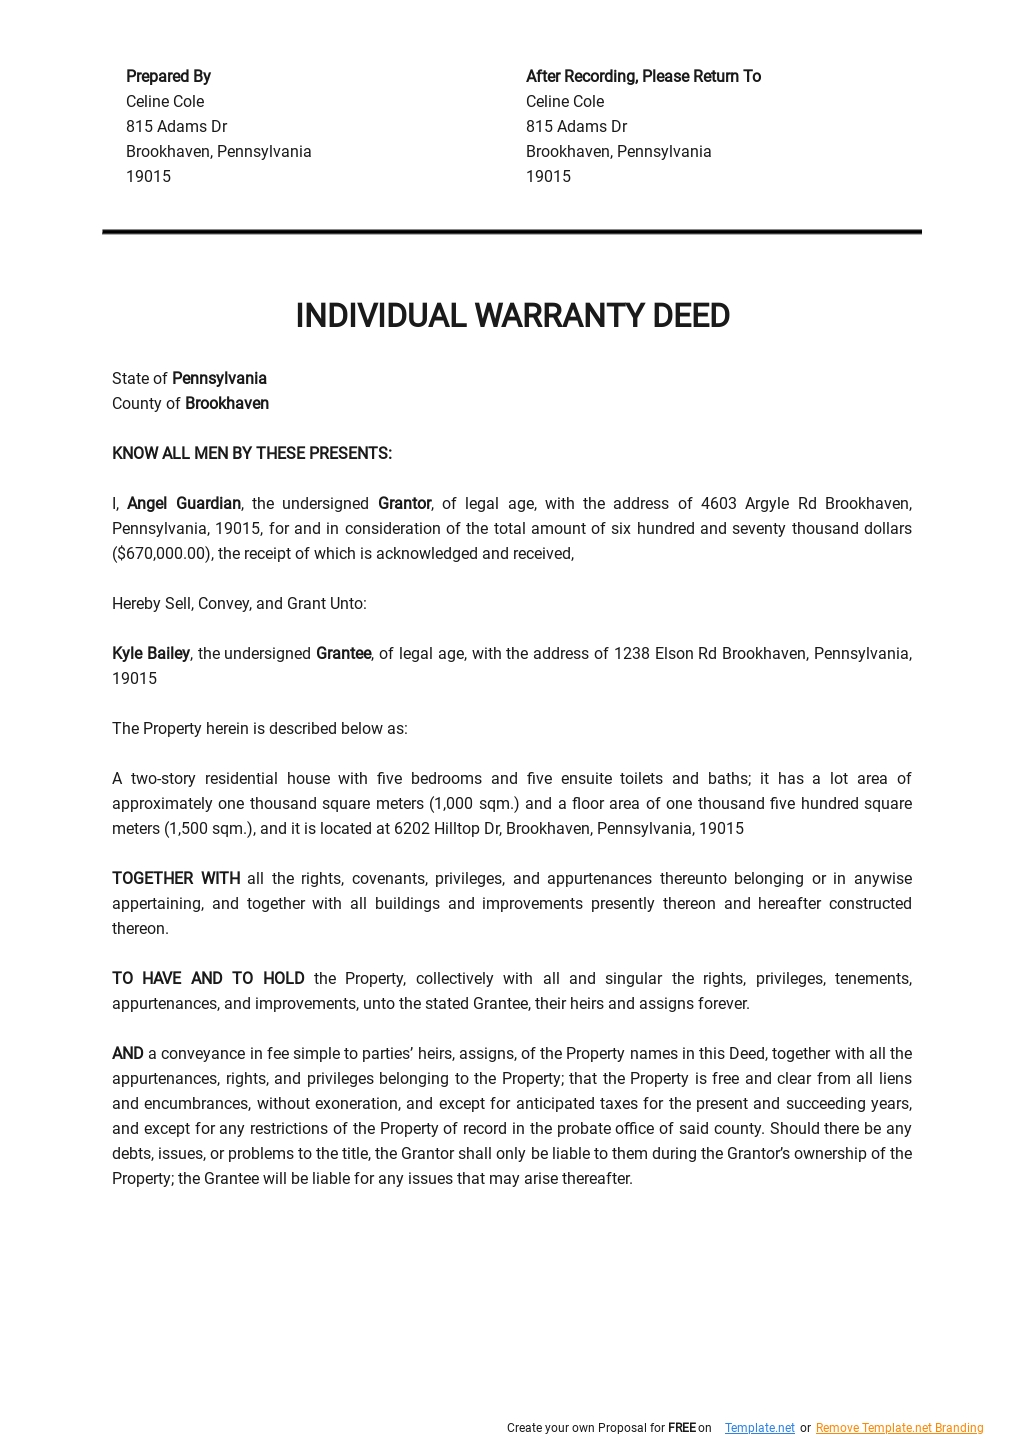 Individual Warranty Deed Template